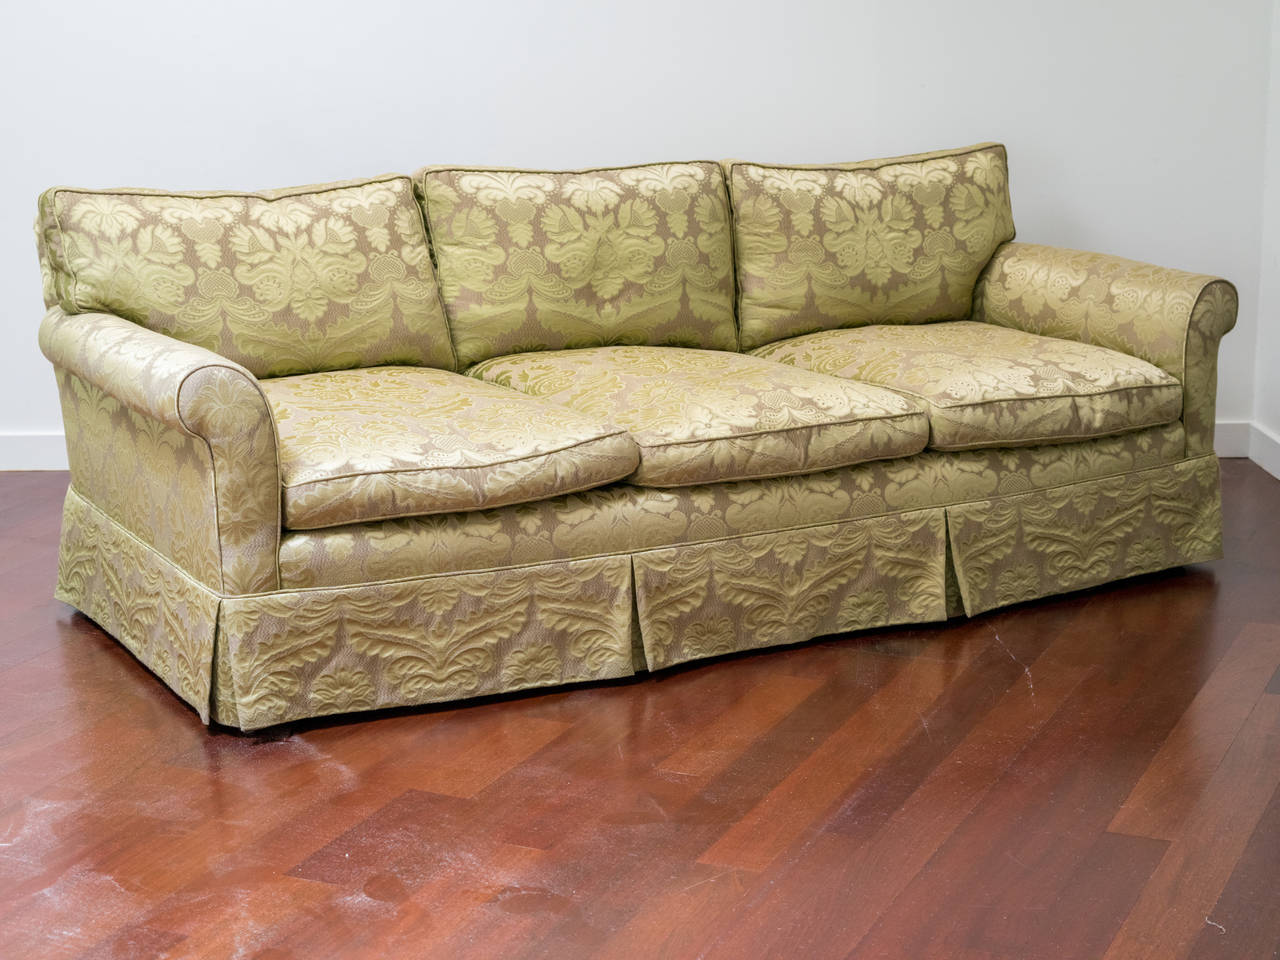 Custom-made down sofa, incredibly comfy.